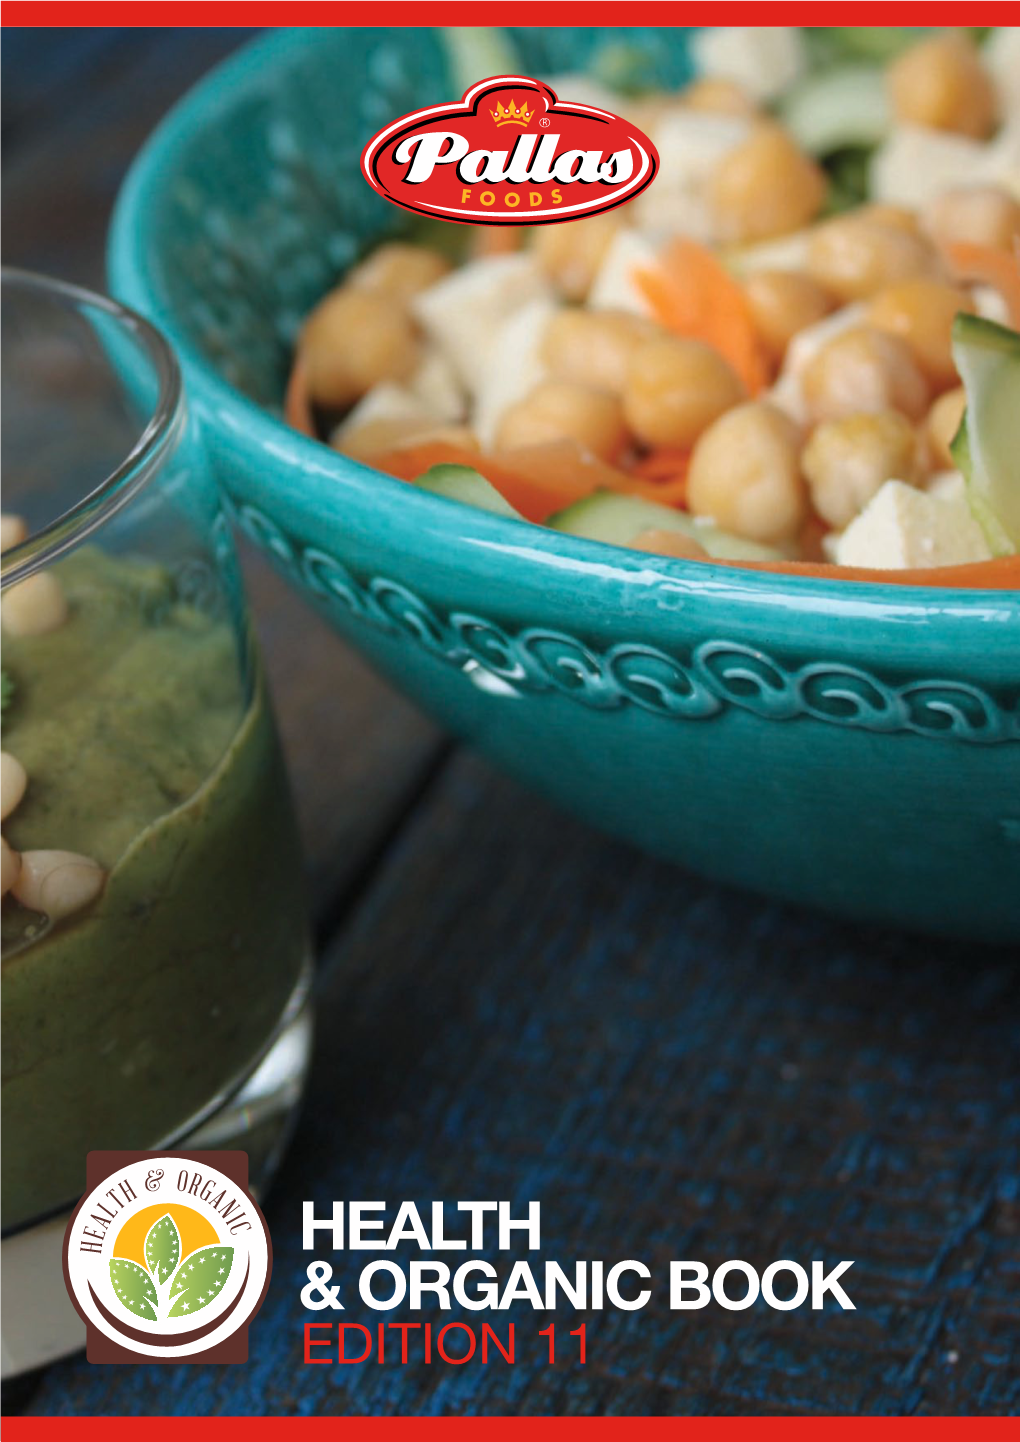 Health & Organic Book